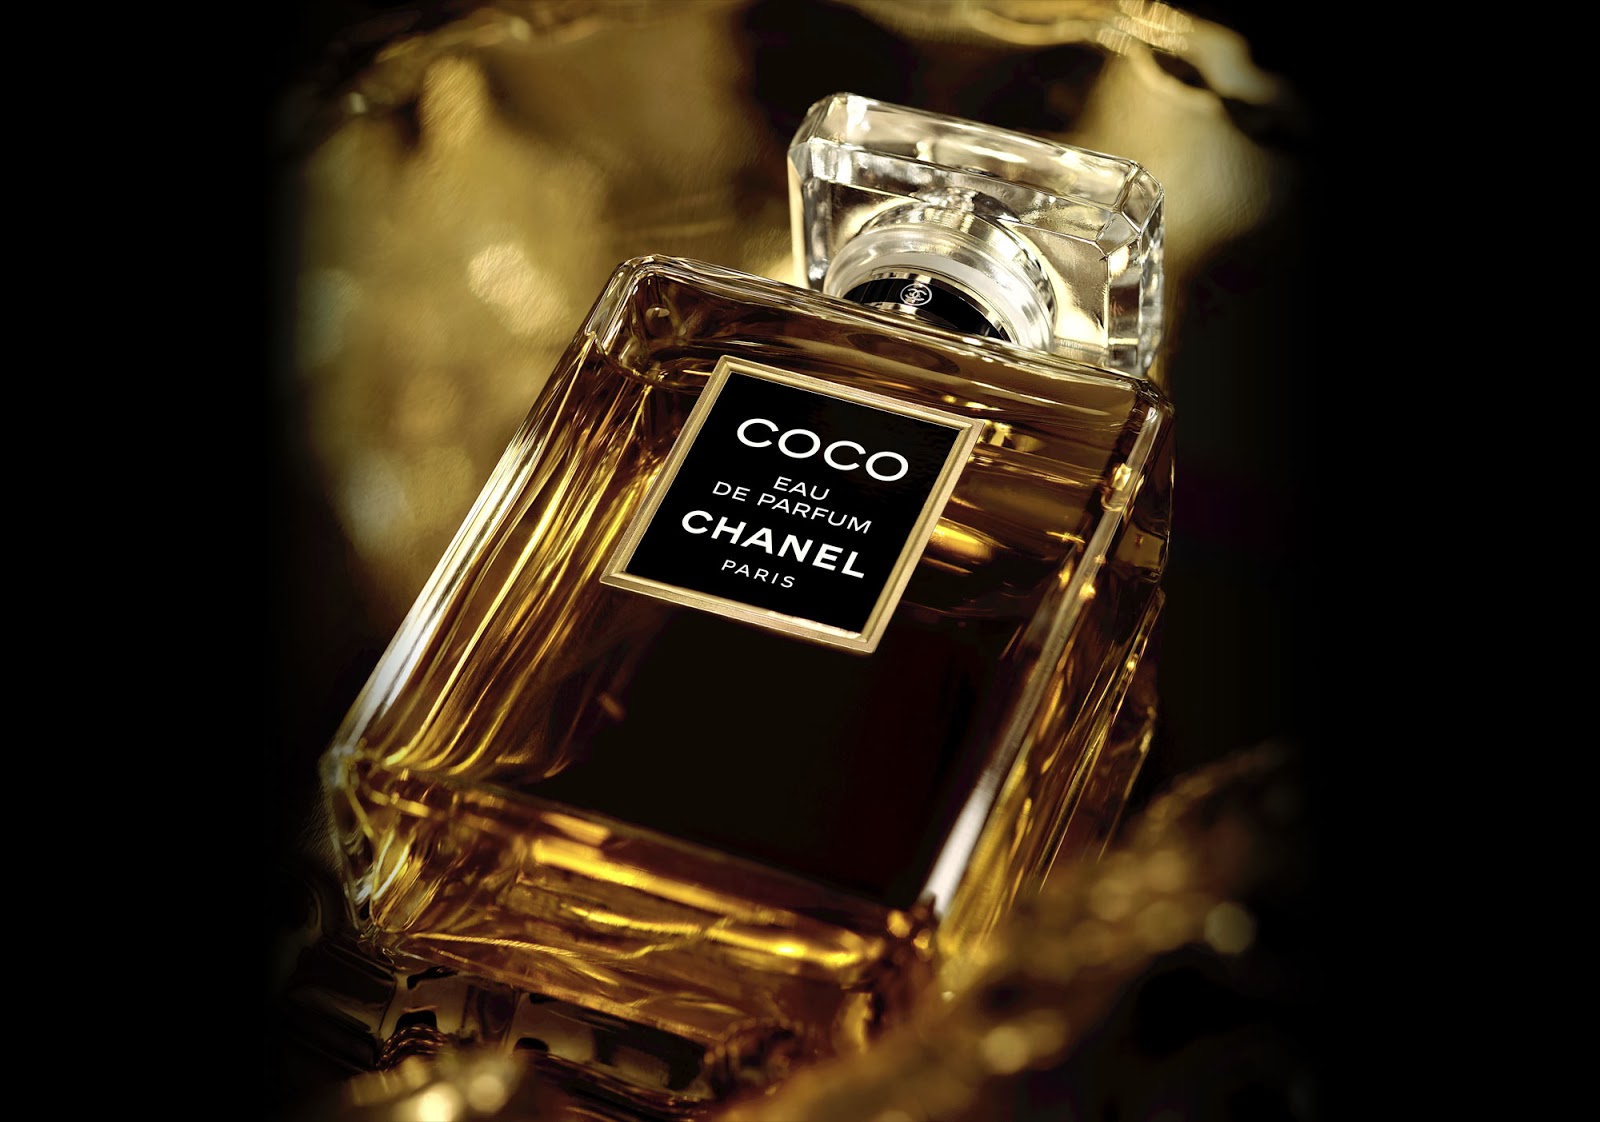 perfume gift sets chanel